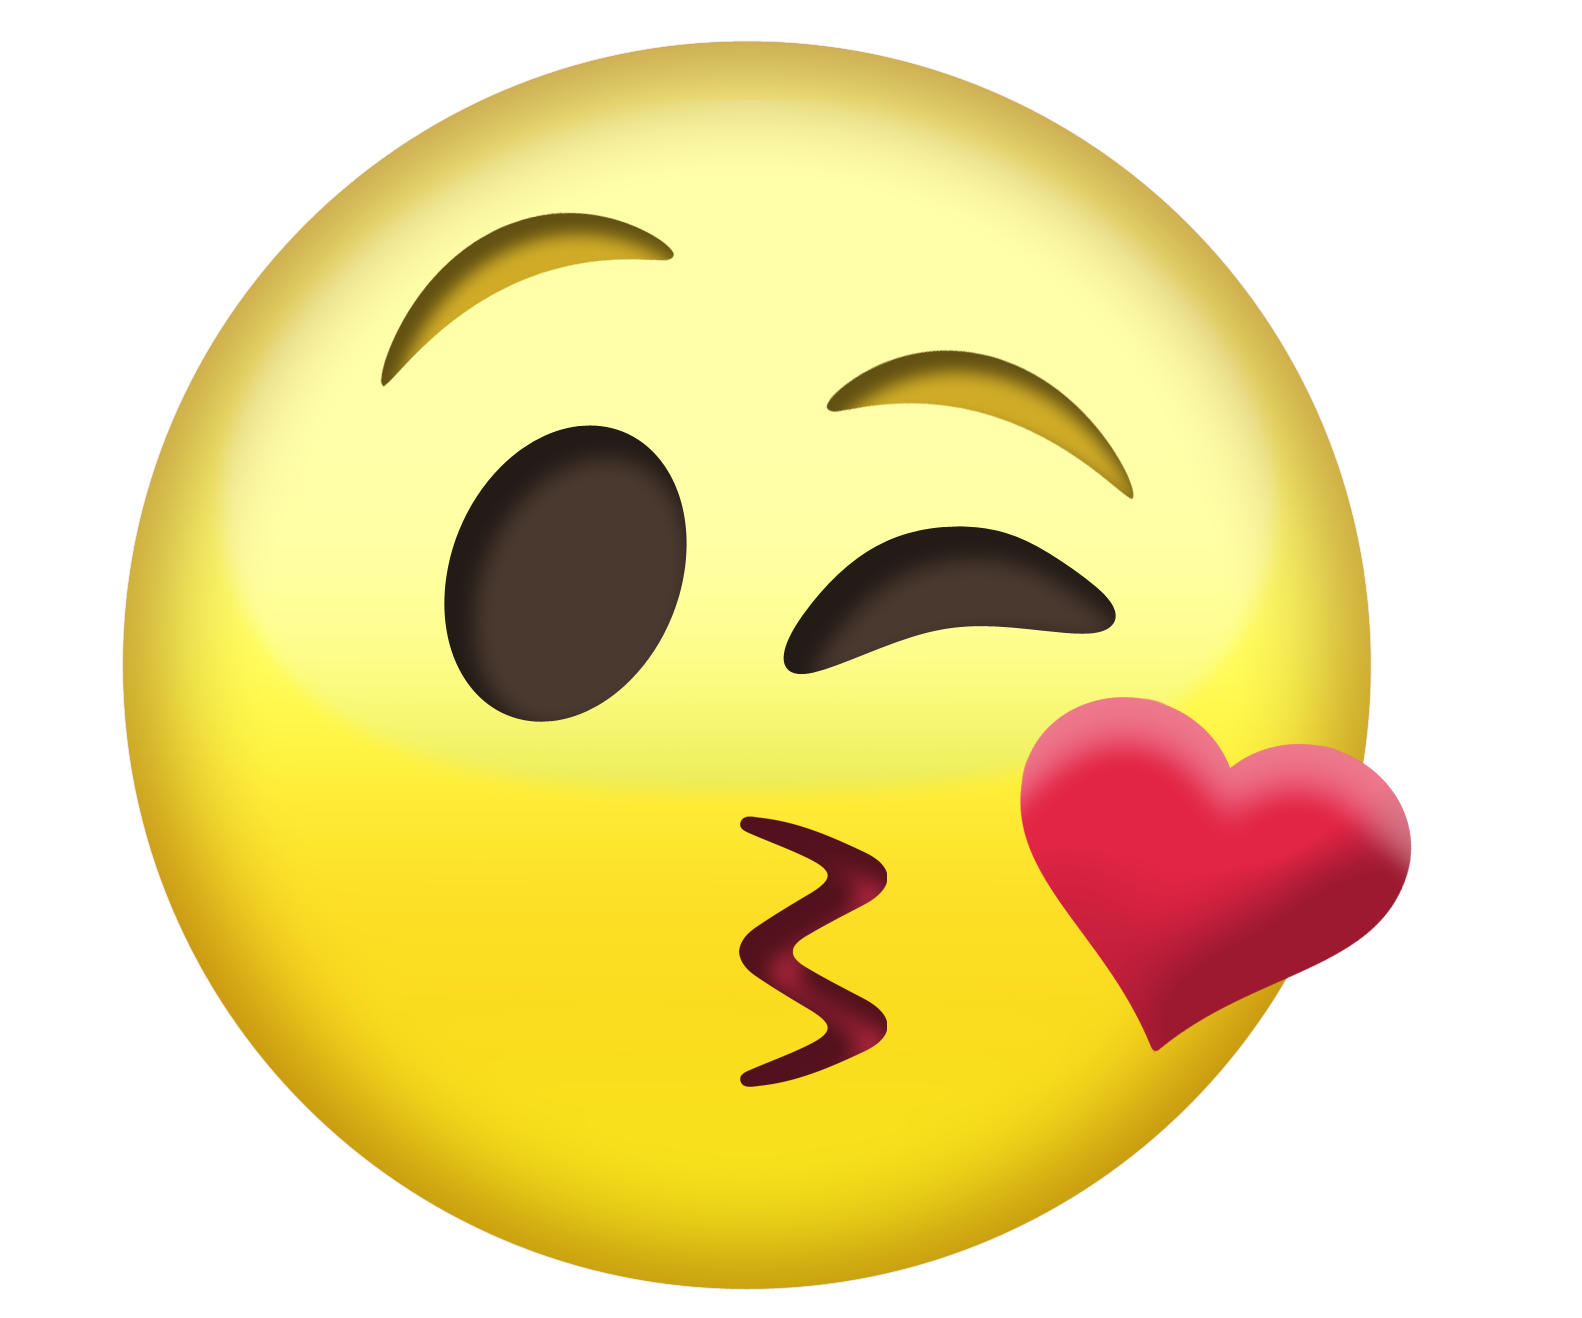 Head Emoji HQ Image Free PNG Image